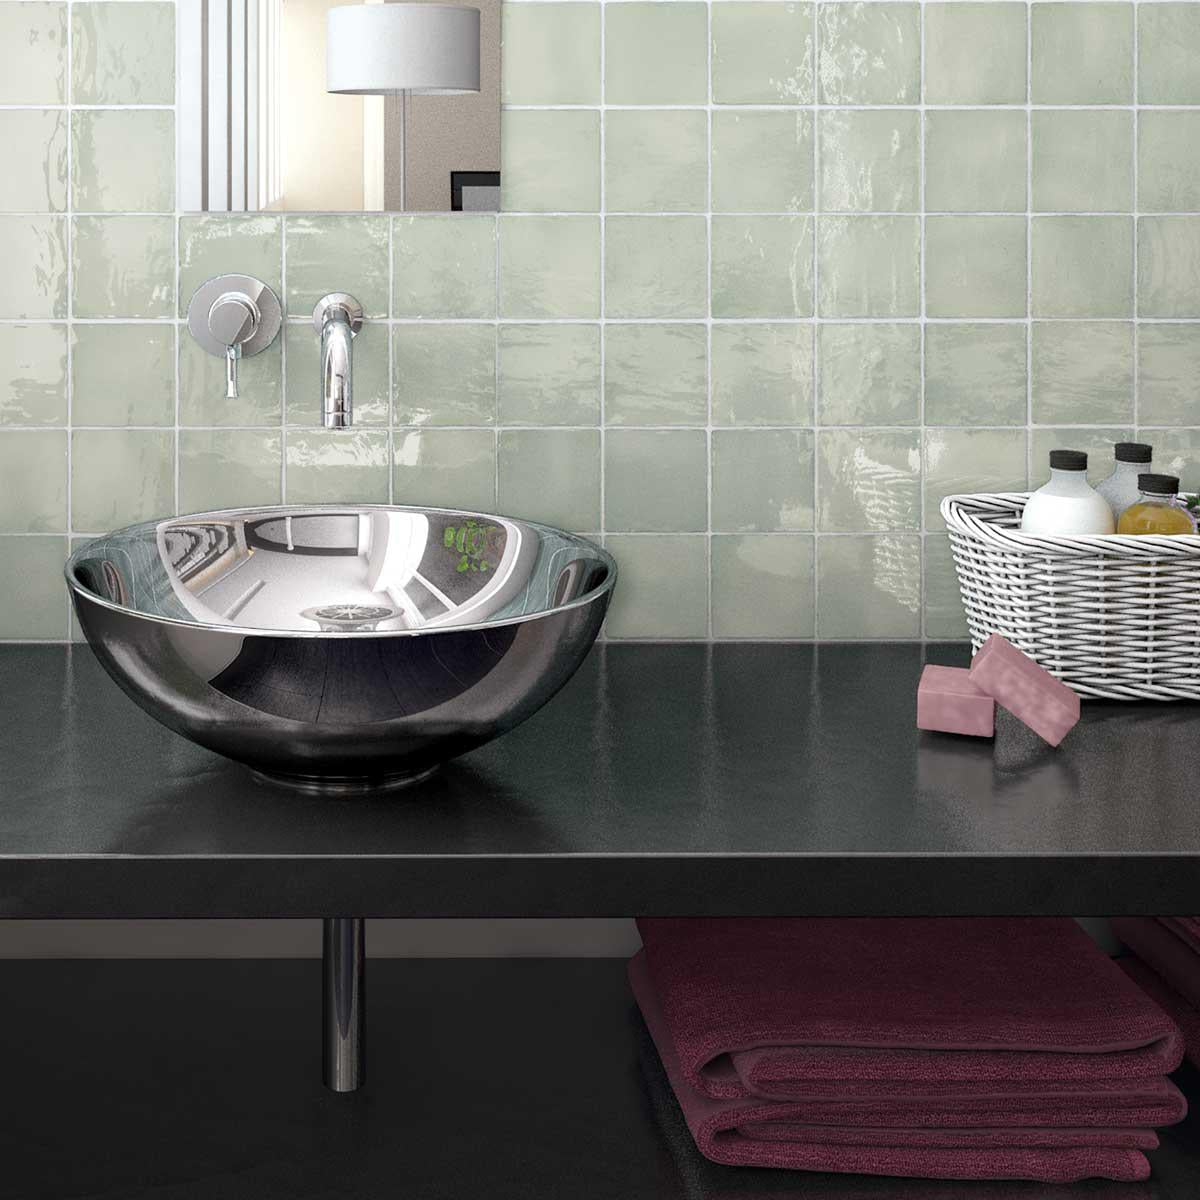 Pastel green ceramic square tiles for a refreshing bathroom design